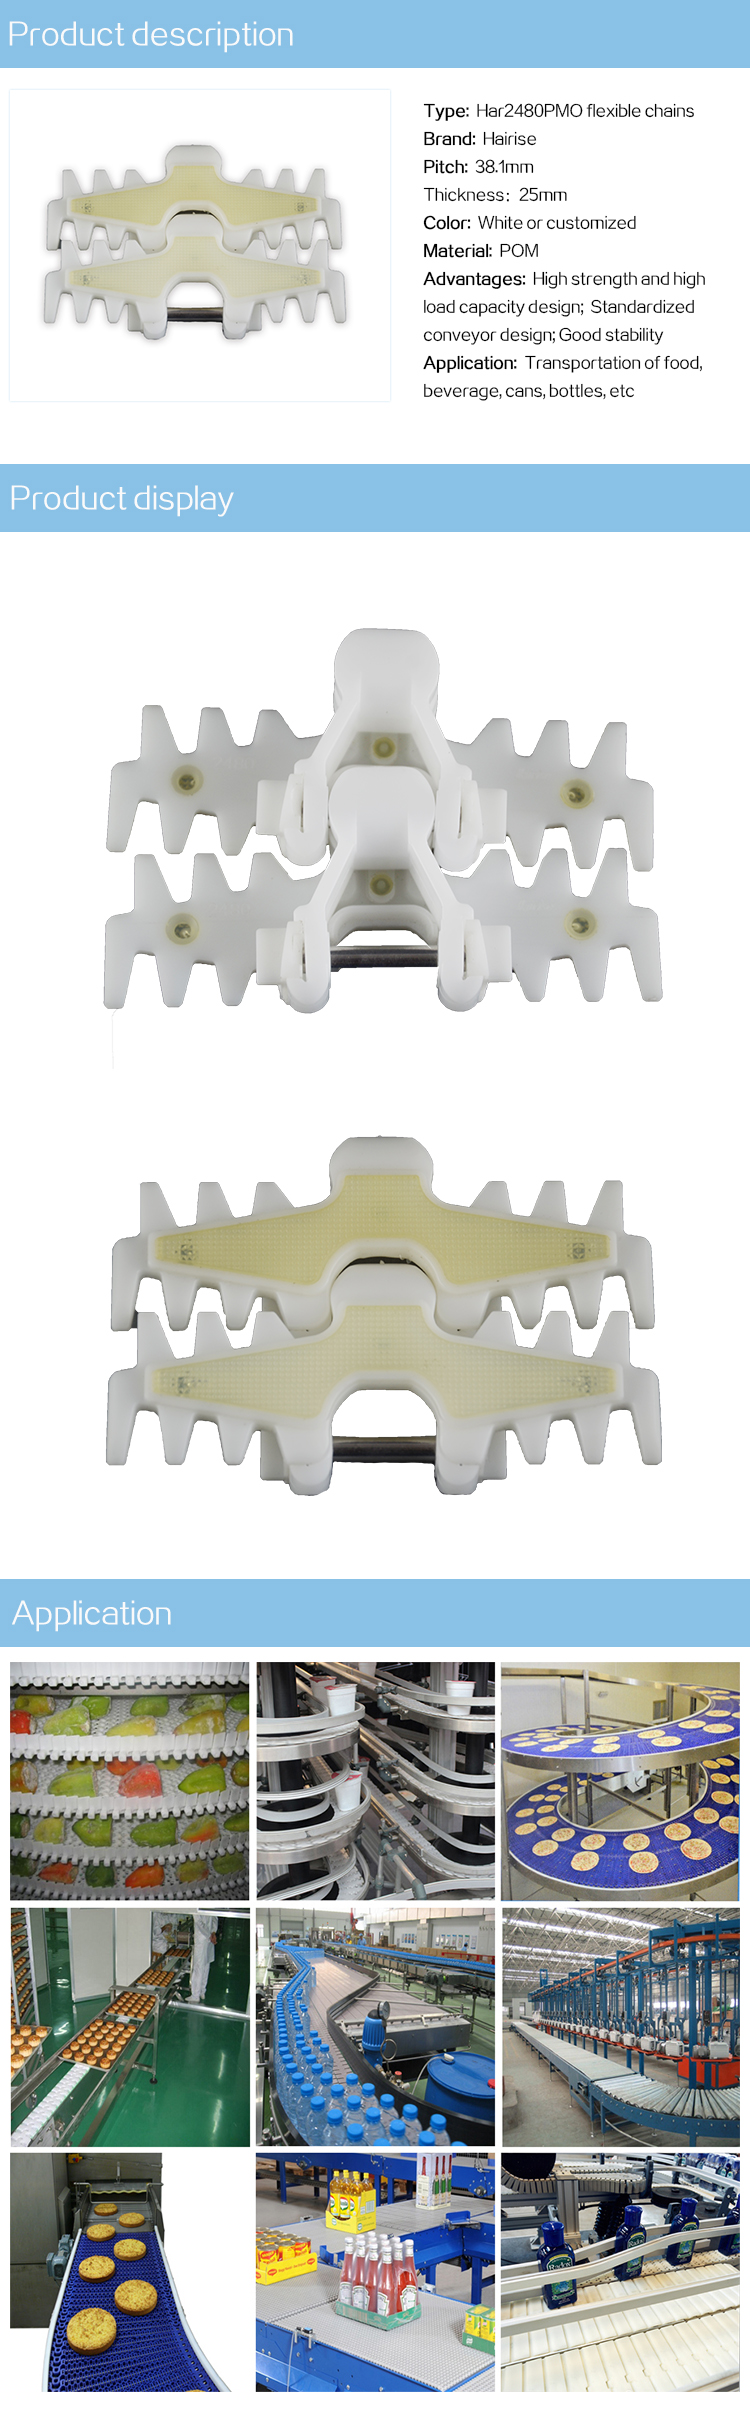 Har2480PMO series rubber cover flexible chains-1.jpg